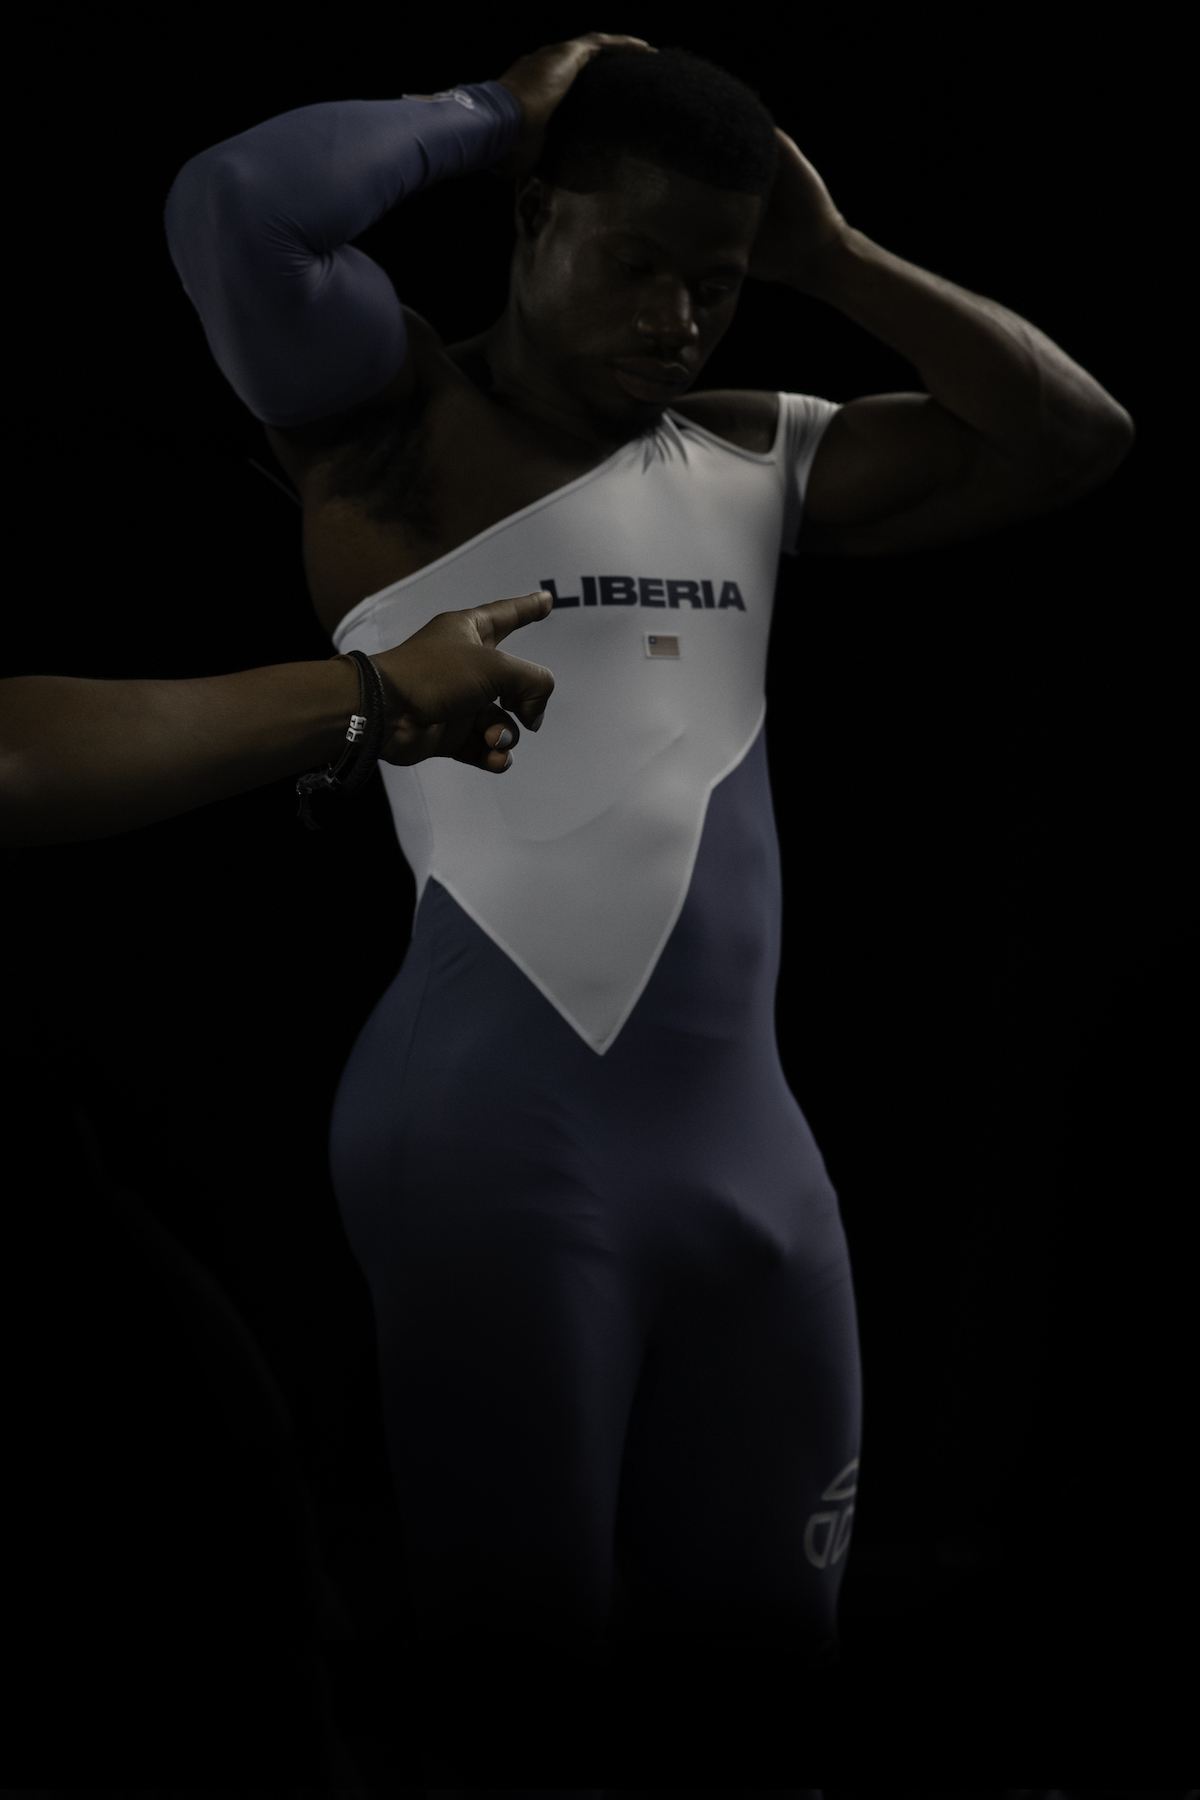 Telfar Olympic Uniforms for Liberia